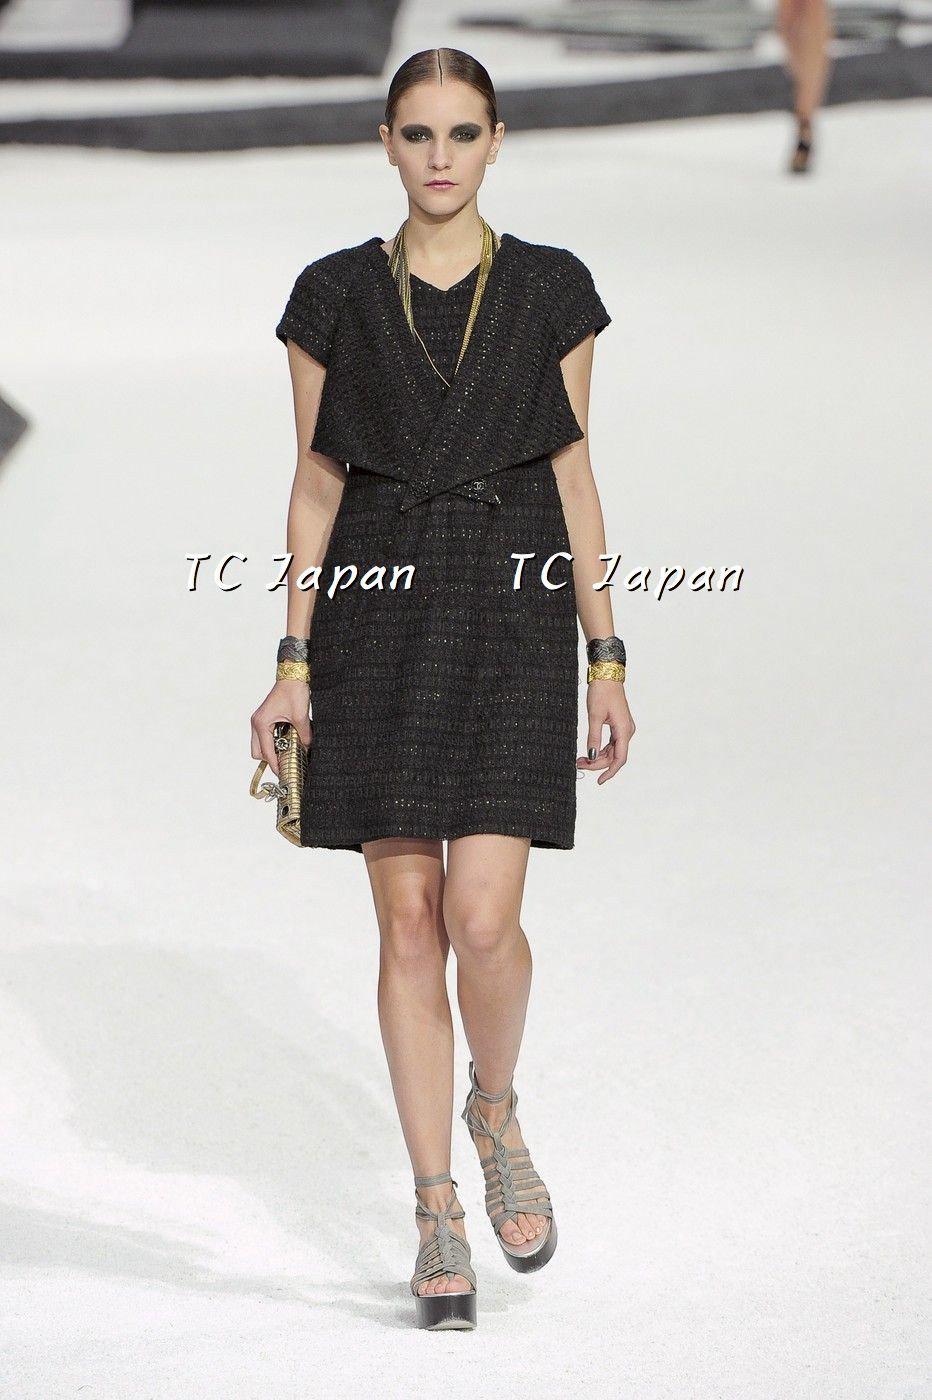 Chanel 11S Black Eyelet Dress 36 38 40 シャネル ブラック・ツイード・ワンピース - シャネル TC JAPAN